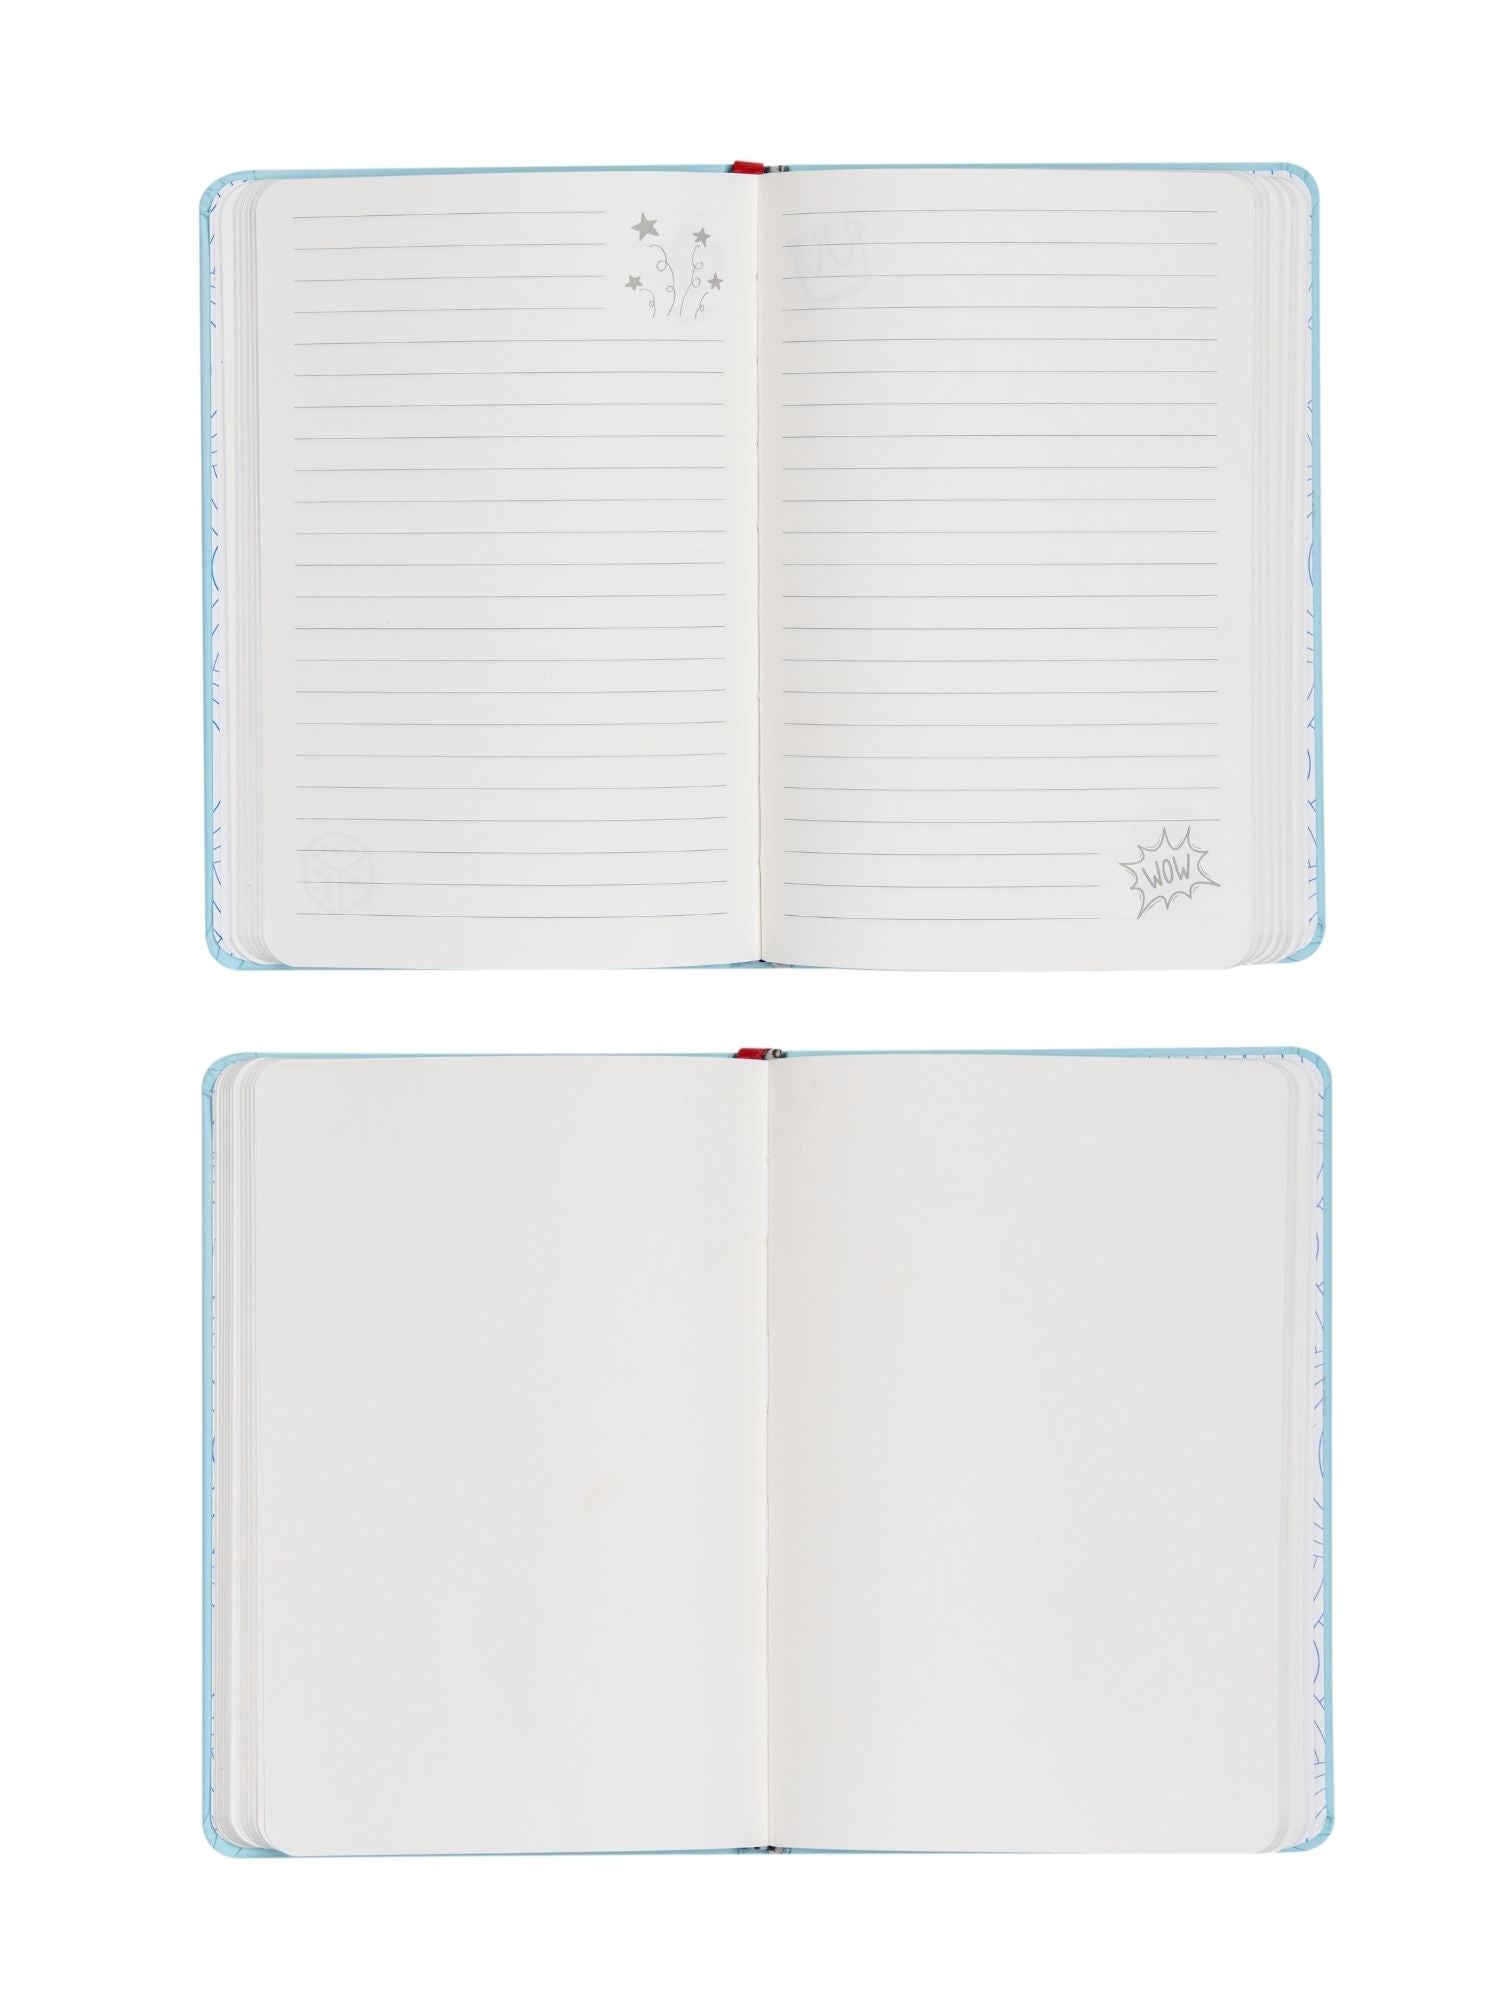 Doodle Initial B Stripes Theme Premium Hard Bound B6 Notebook Diary